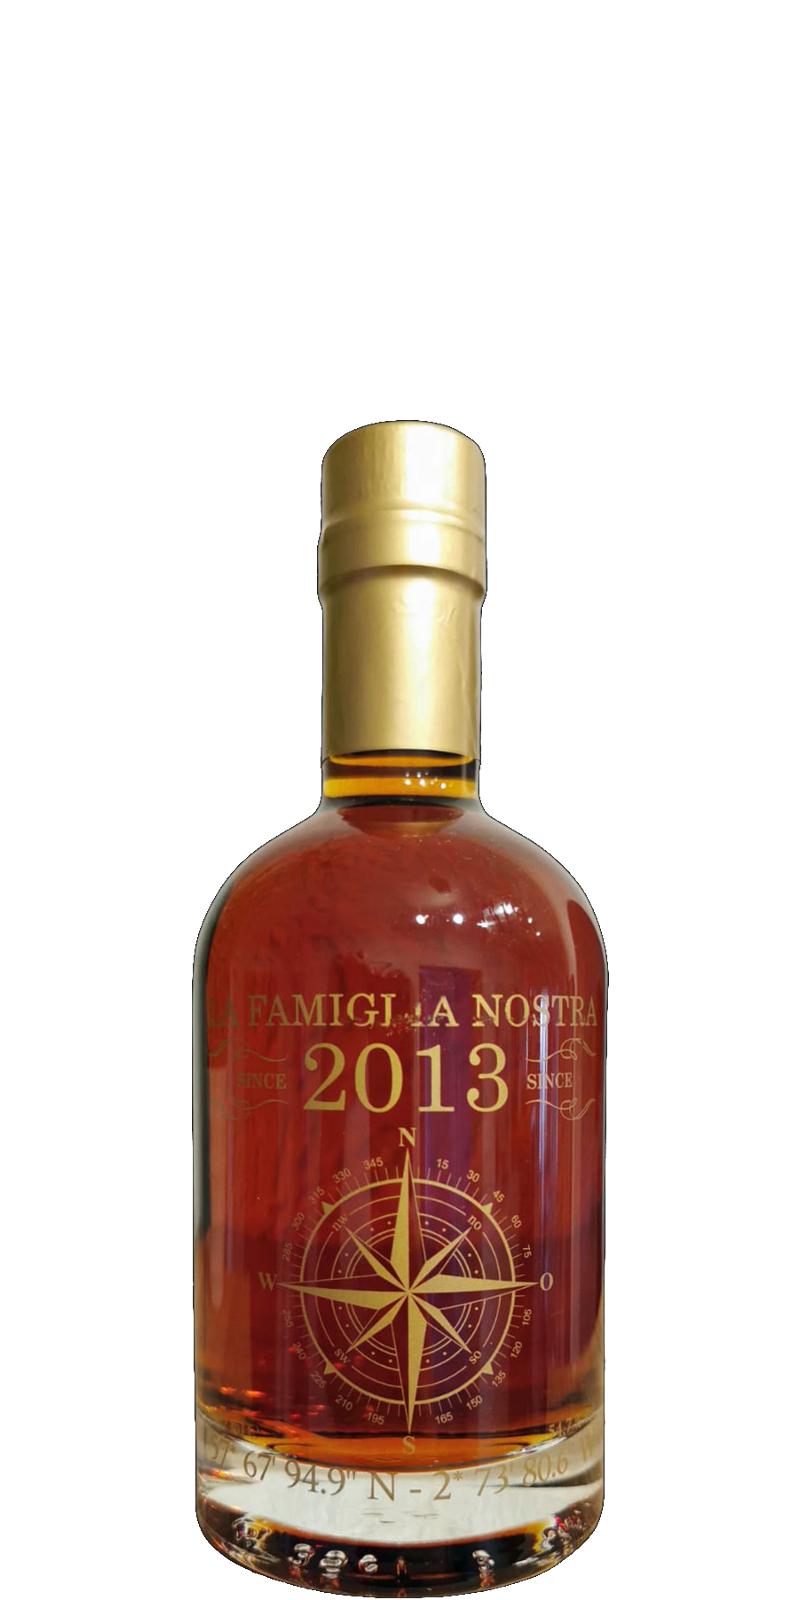 La Famiglia Nostra 2013 LFN 57 67 94.9 N 2 73 80.6 Amontillado Octave SC56 private bottling Thorsten Niesner 54.7% 350ml